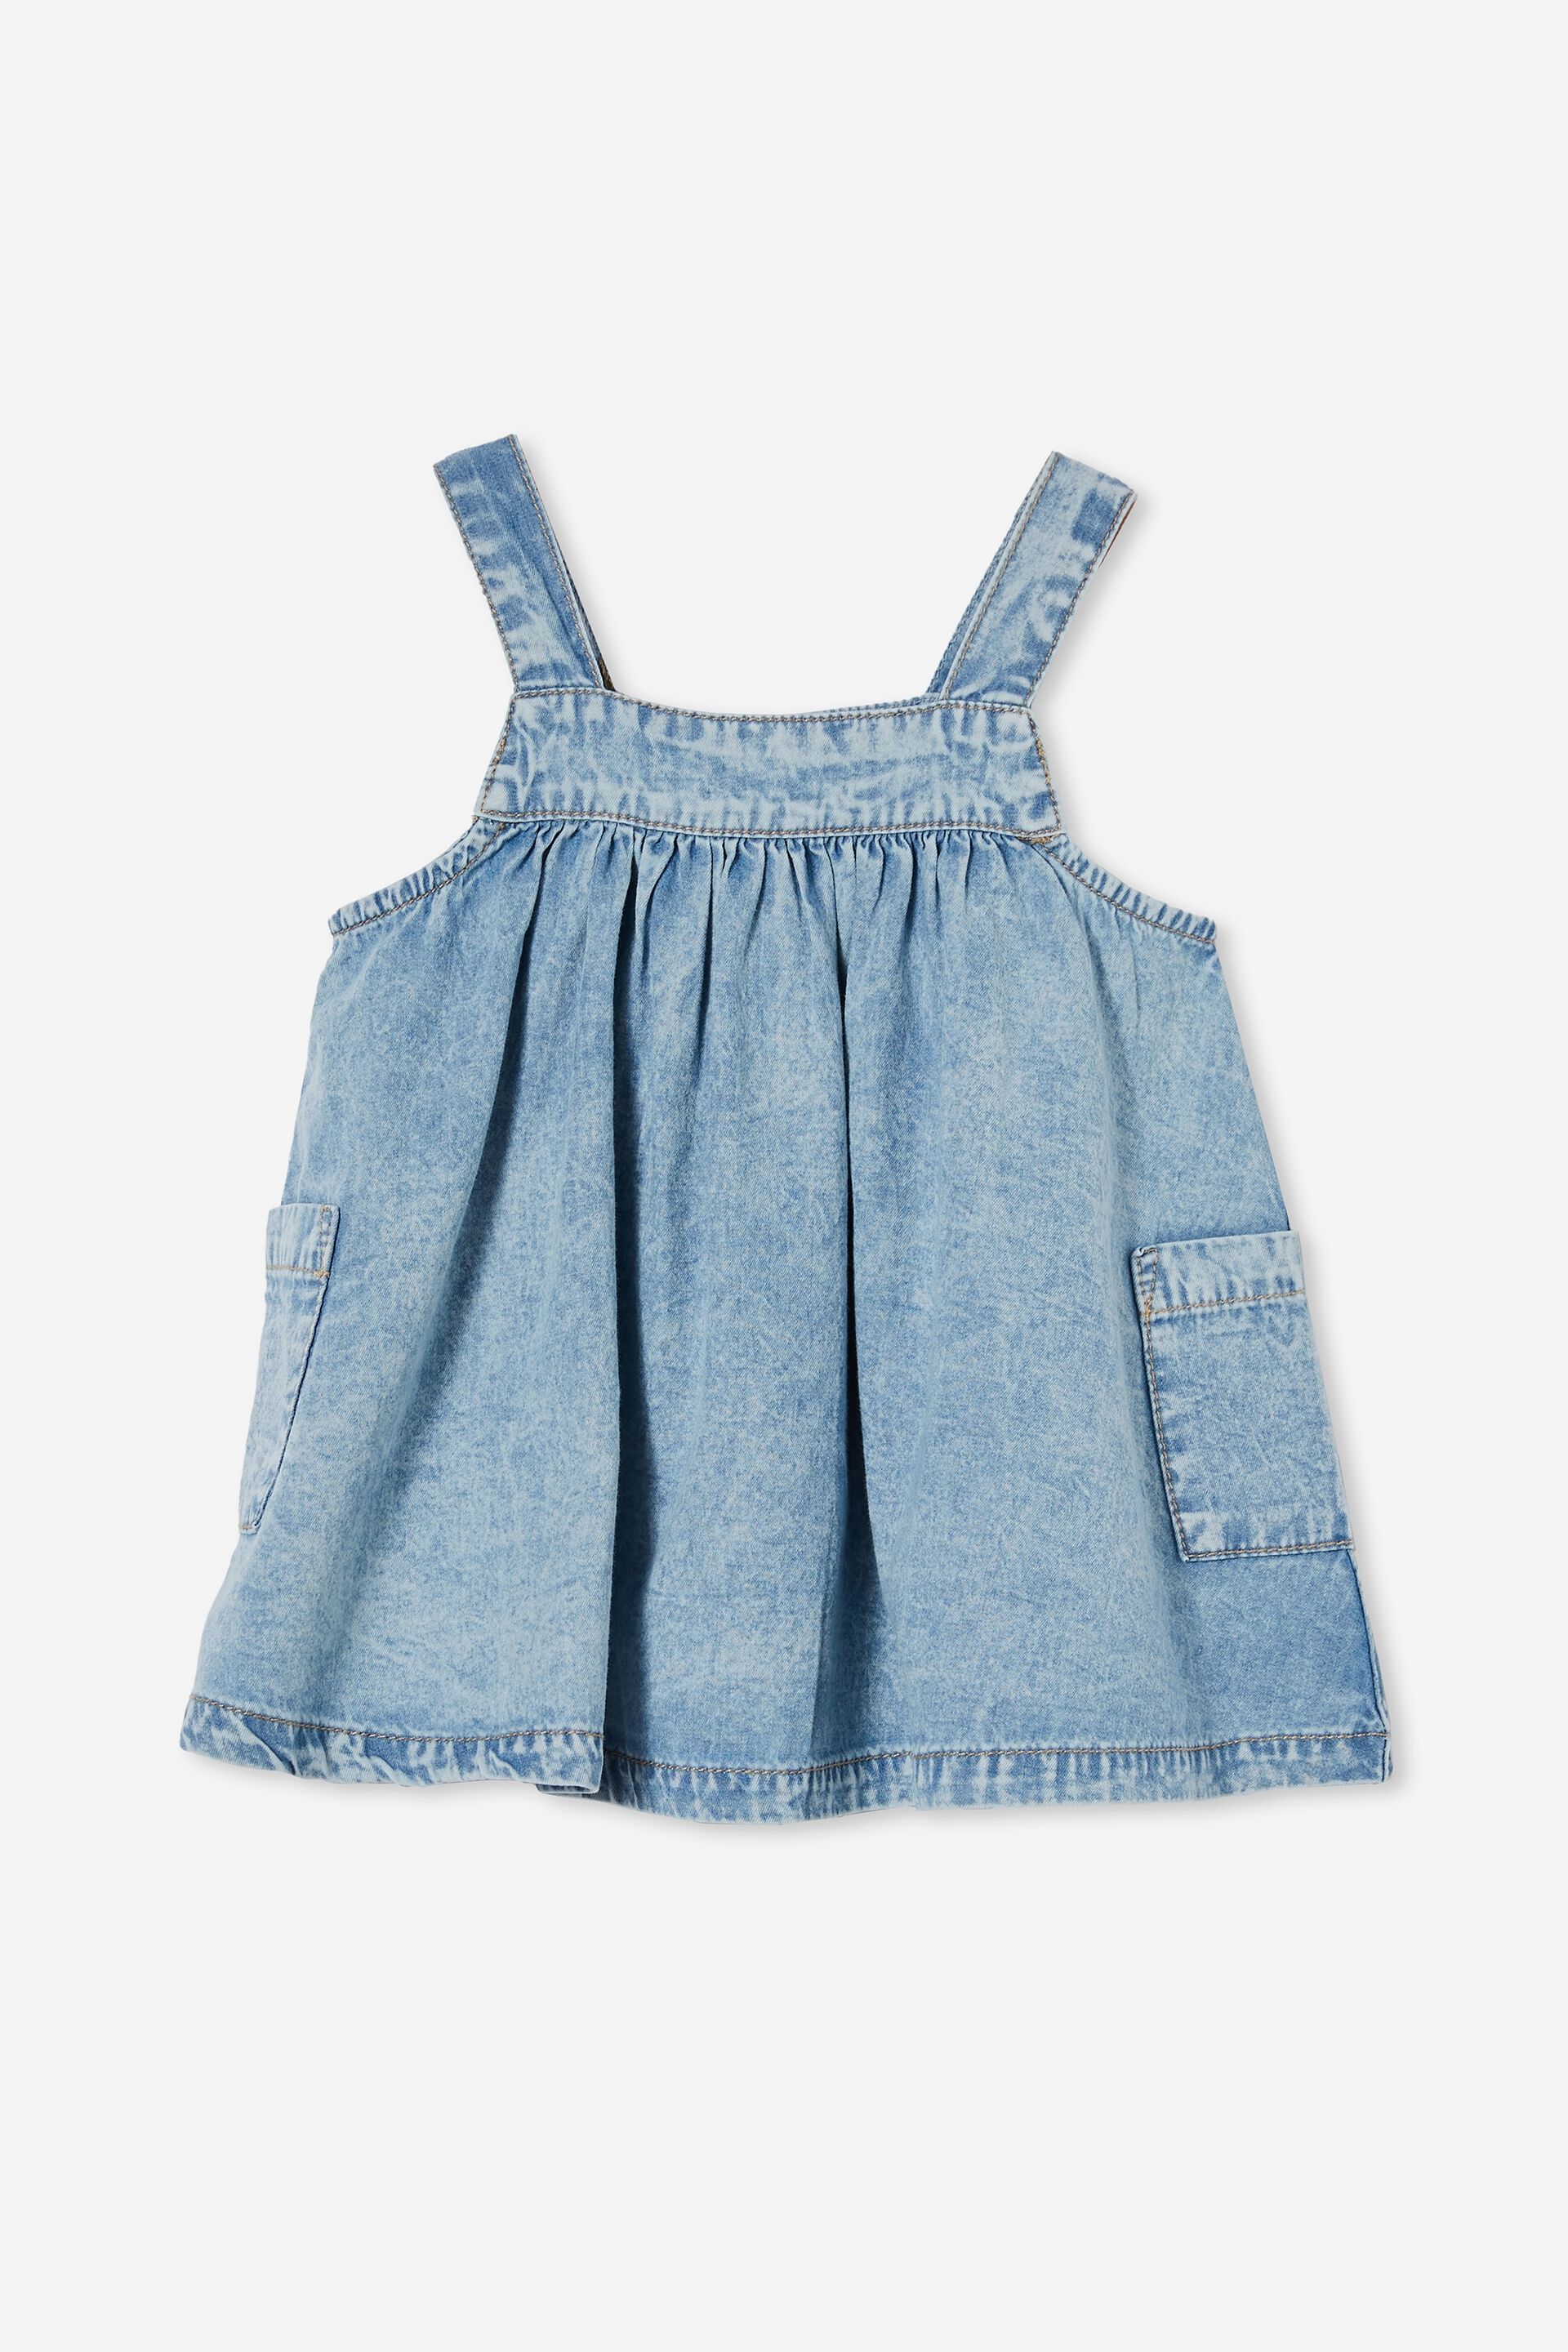 KIDS FASHION Dresses Jean discount 96% Blue 18-24M NoName casual dress 